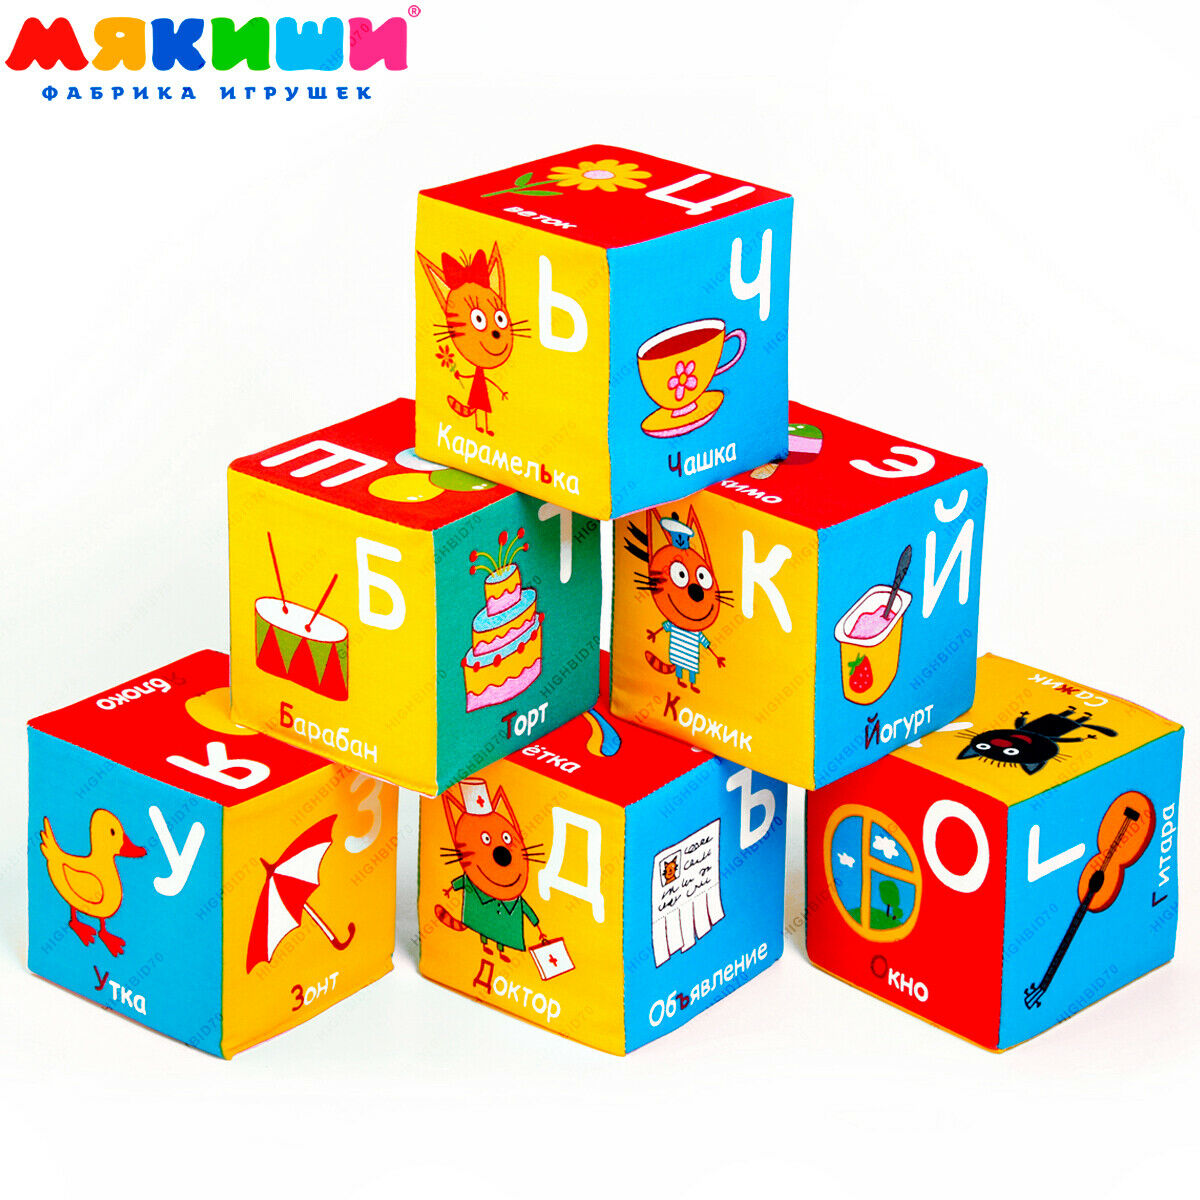 Myakishi 472 Azbuka, Soft Building Blocks, Kubiki, Russian Alphabet, Abc